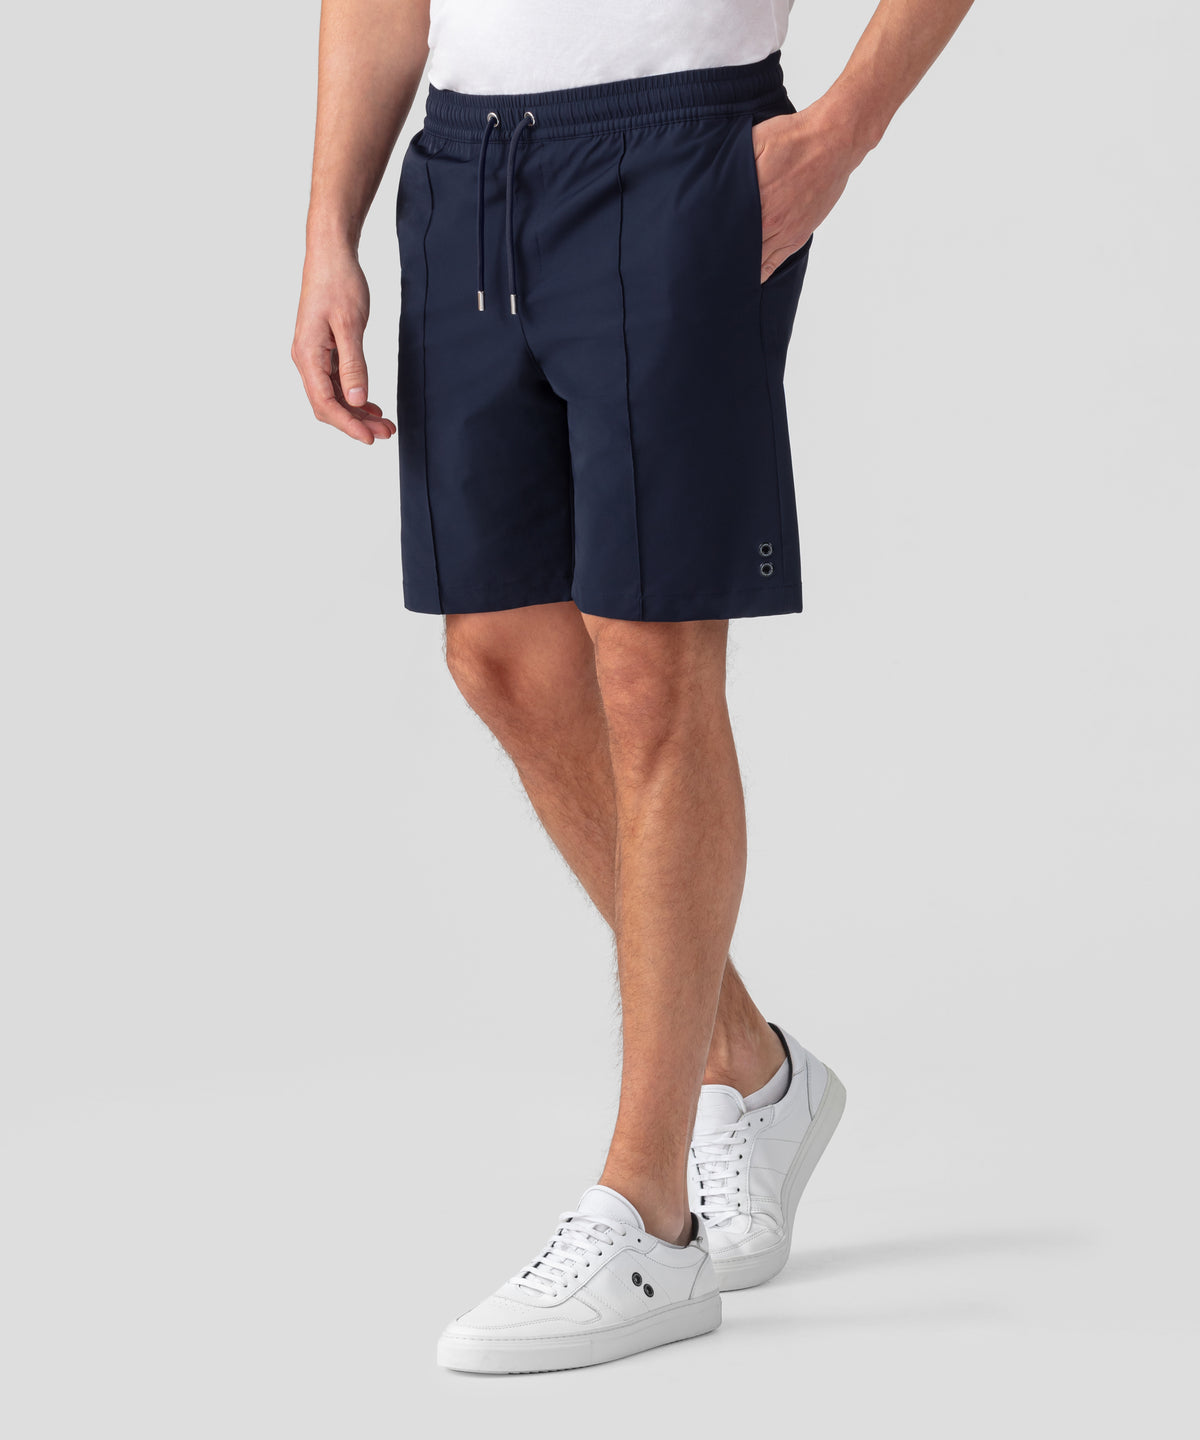 Light City Shorts: Navy